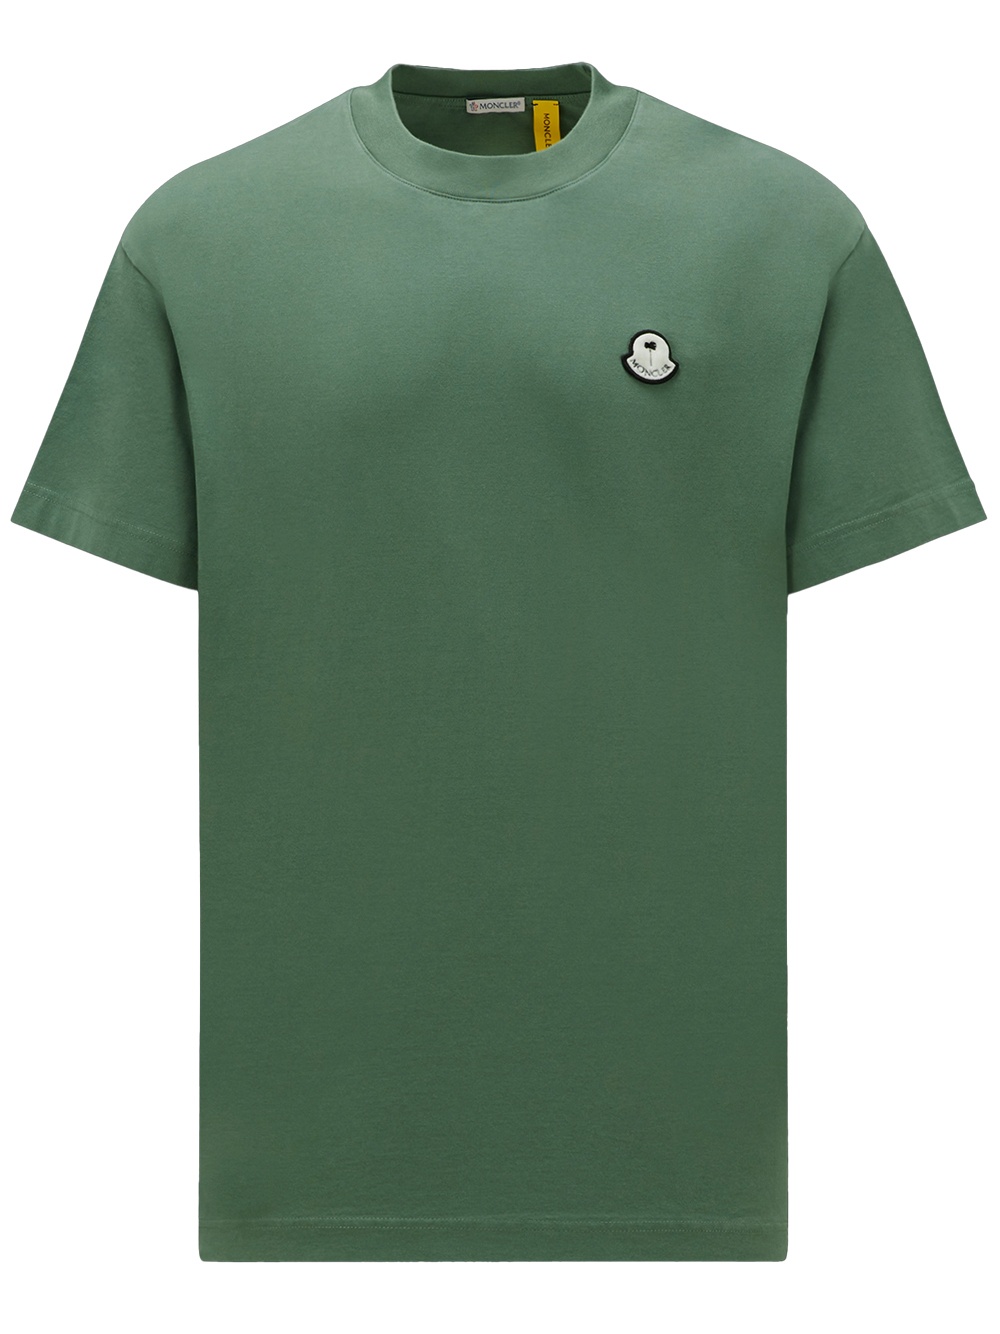 MONCLER GENIUS - Cotton T-shirt With Logo